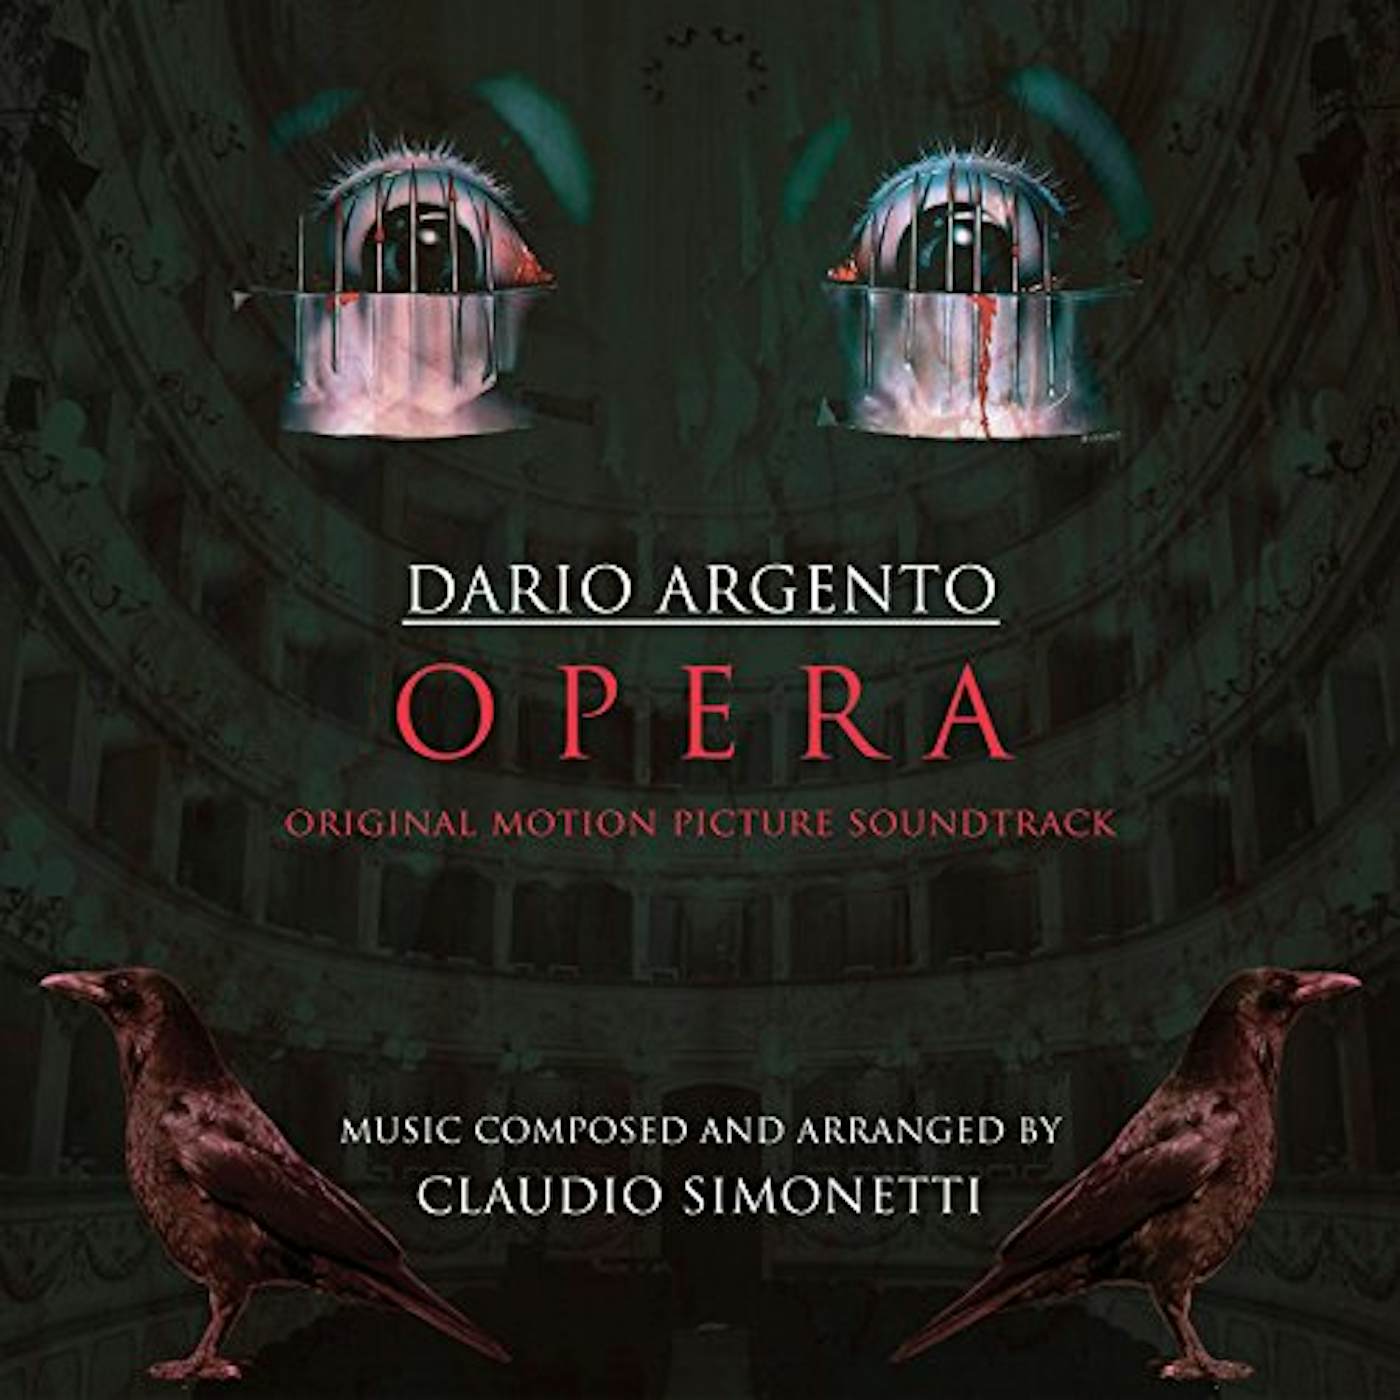 Claudio Simonetti OPERA (DARIO ARGENTO) Vinyl Record